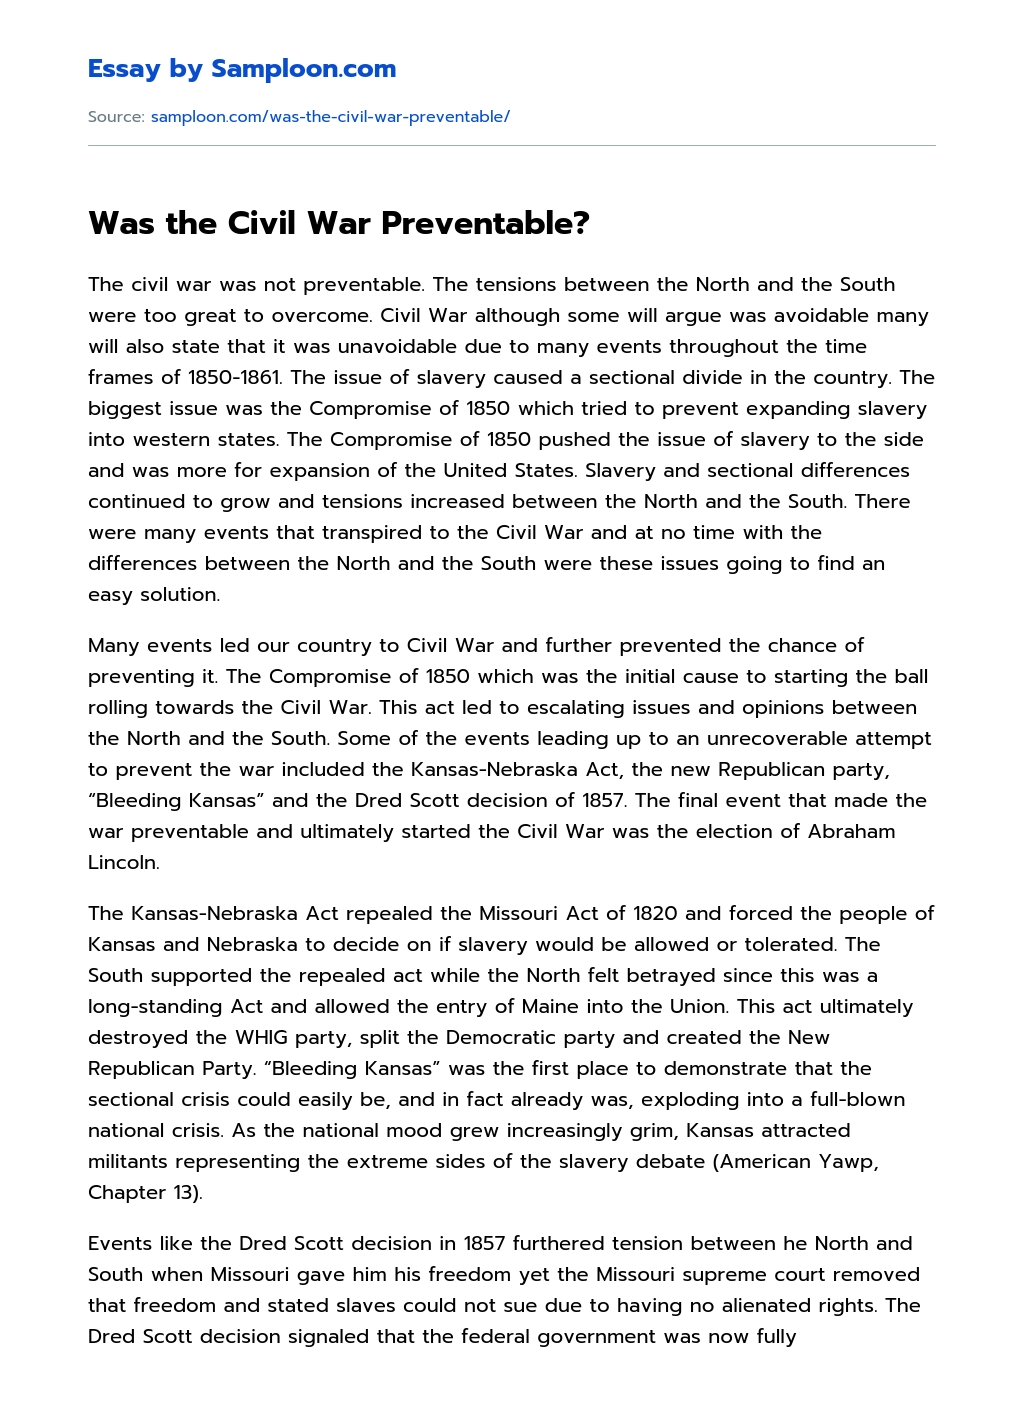 Was the Civil War Preventable? essay